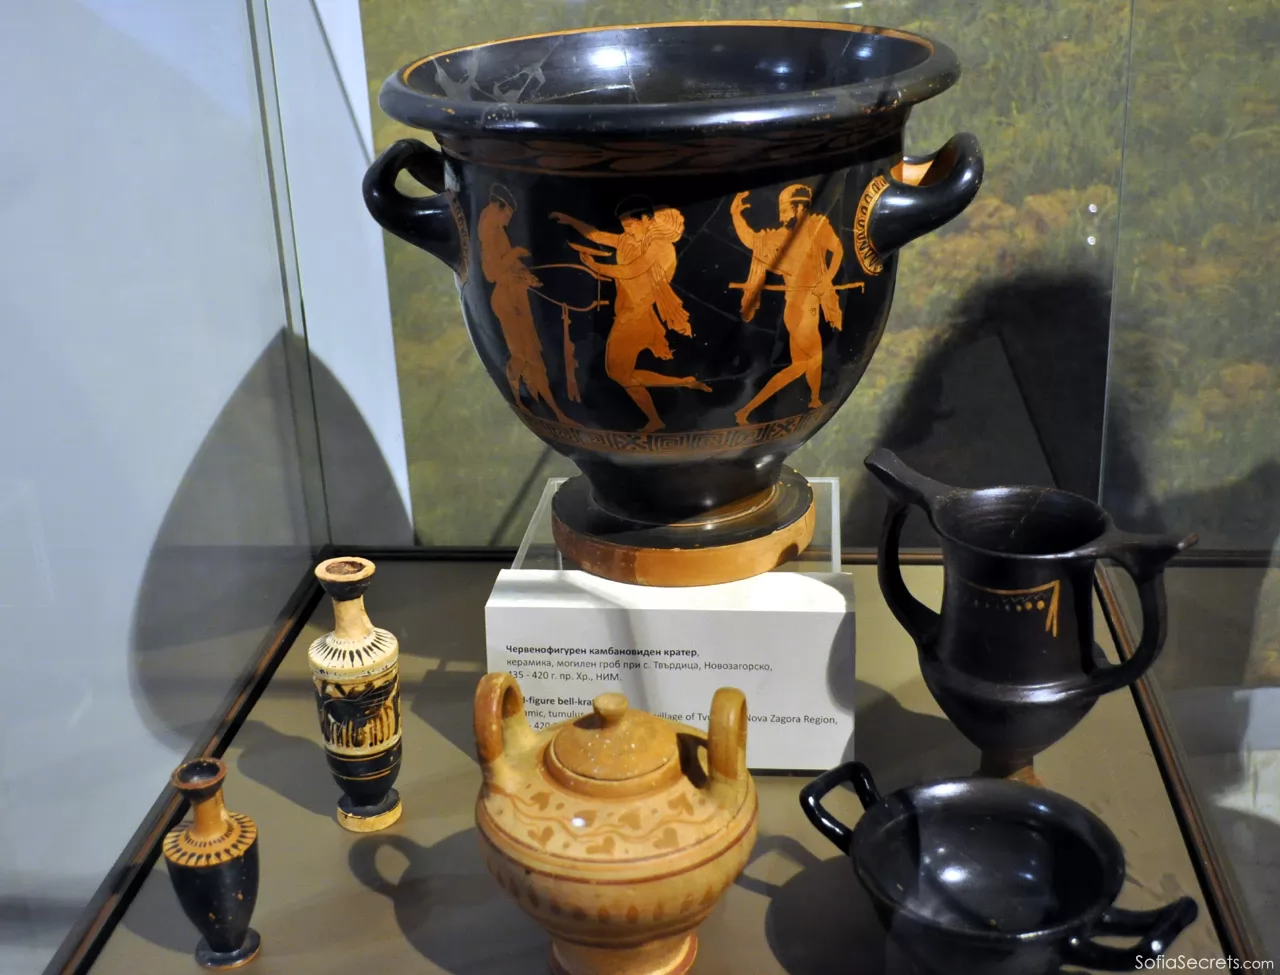 Antique vase from the Roman empire in Bulgaria historical museum